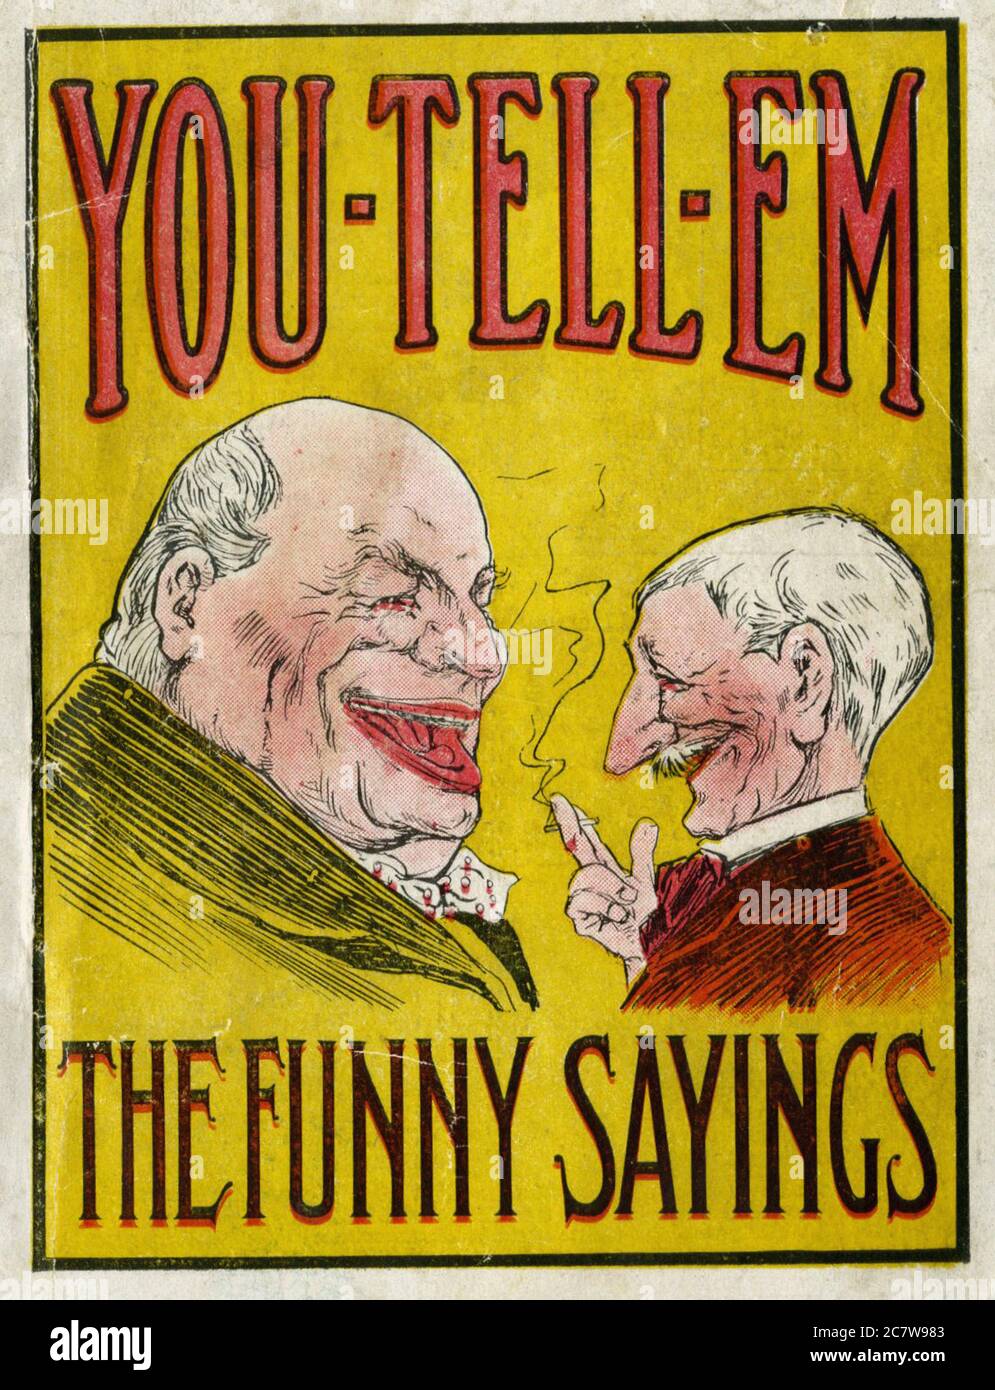 You Tell Em - The Funny Sayings - Vintage early twenty century american jokes magazine Stock Photo